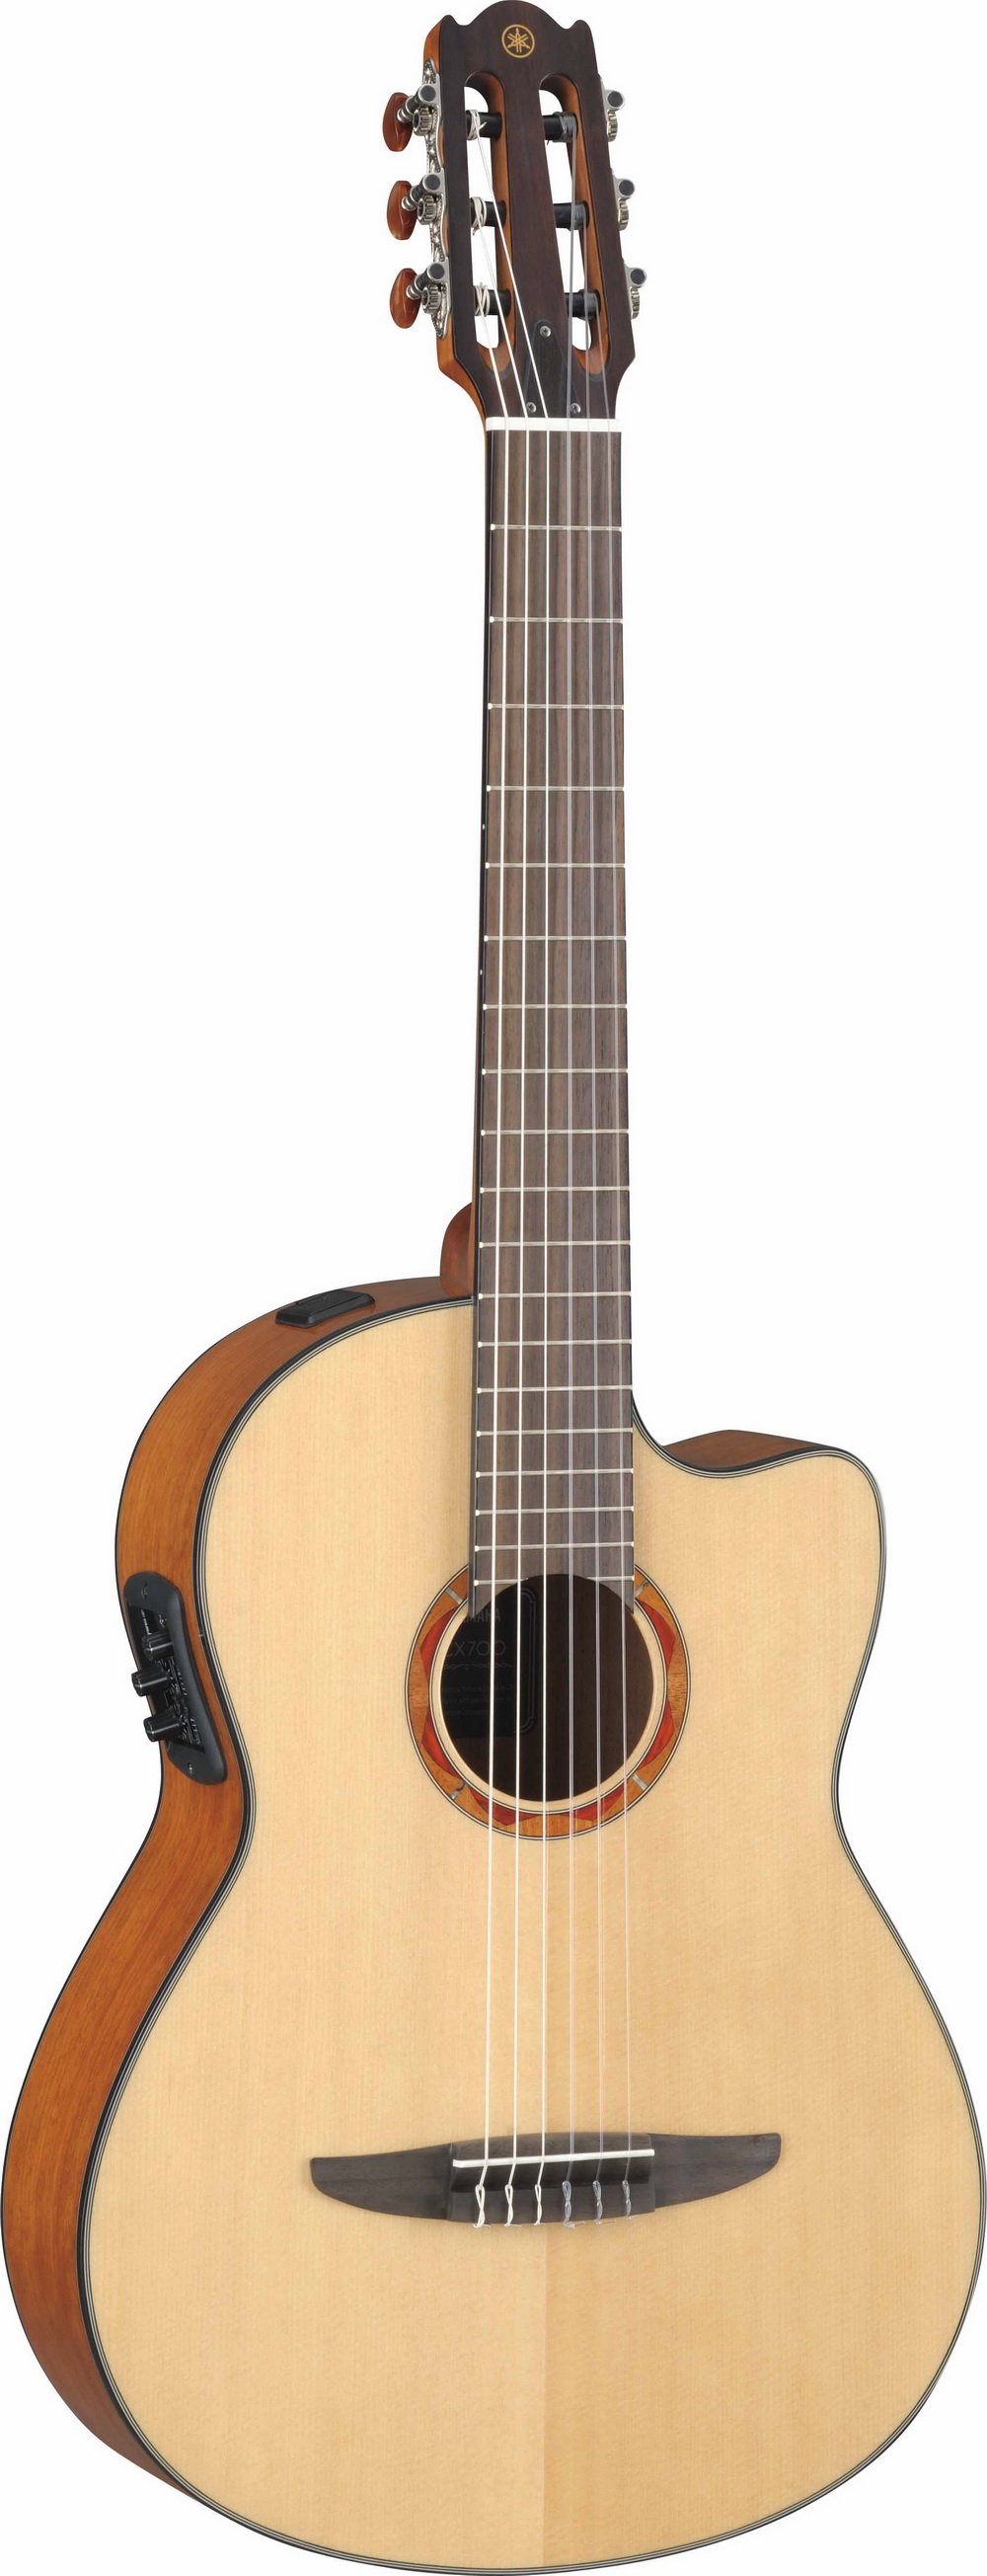 Электроклассическая гитара Yamaha NCX700